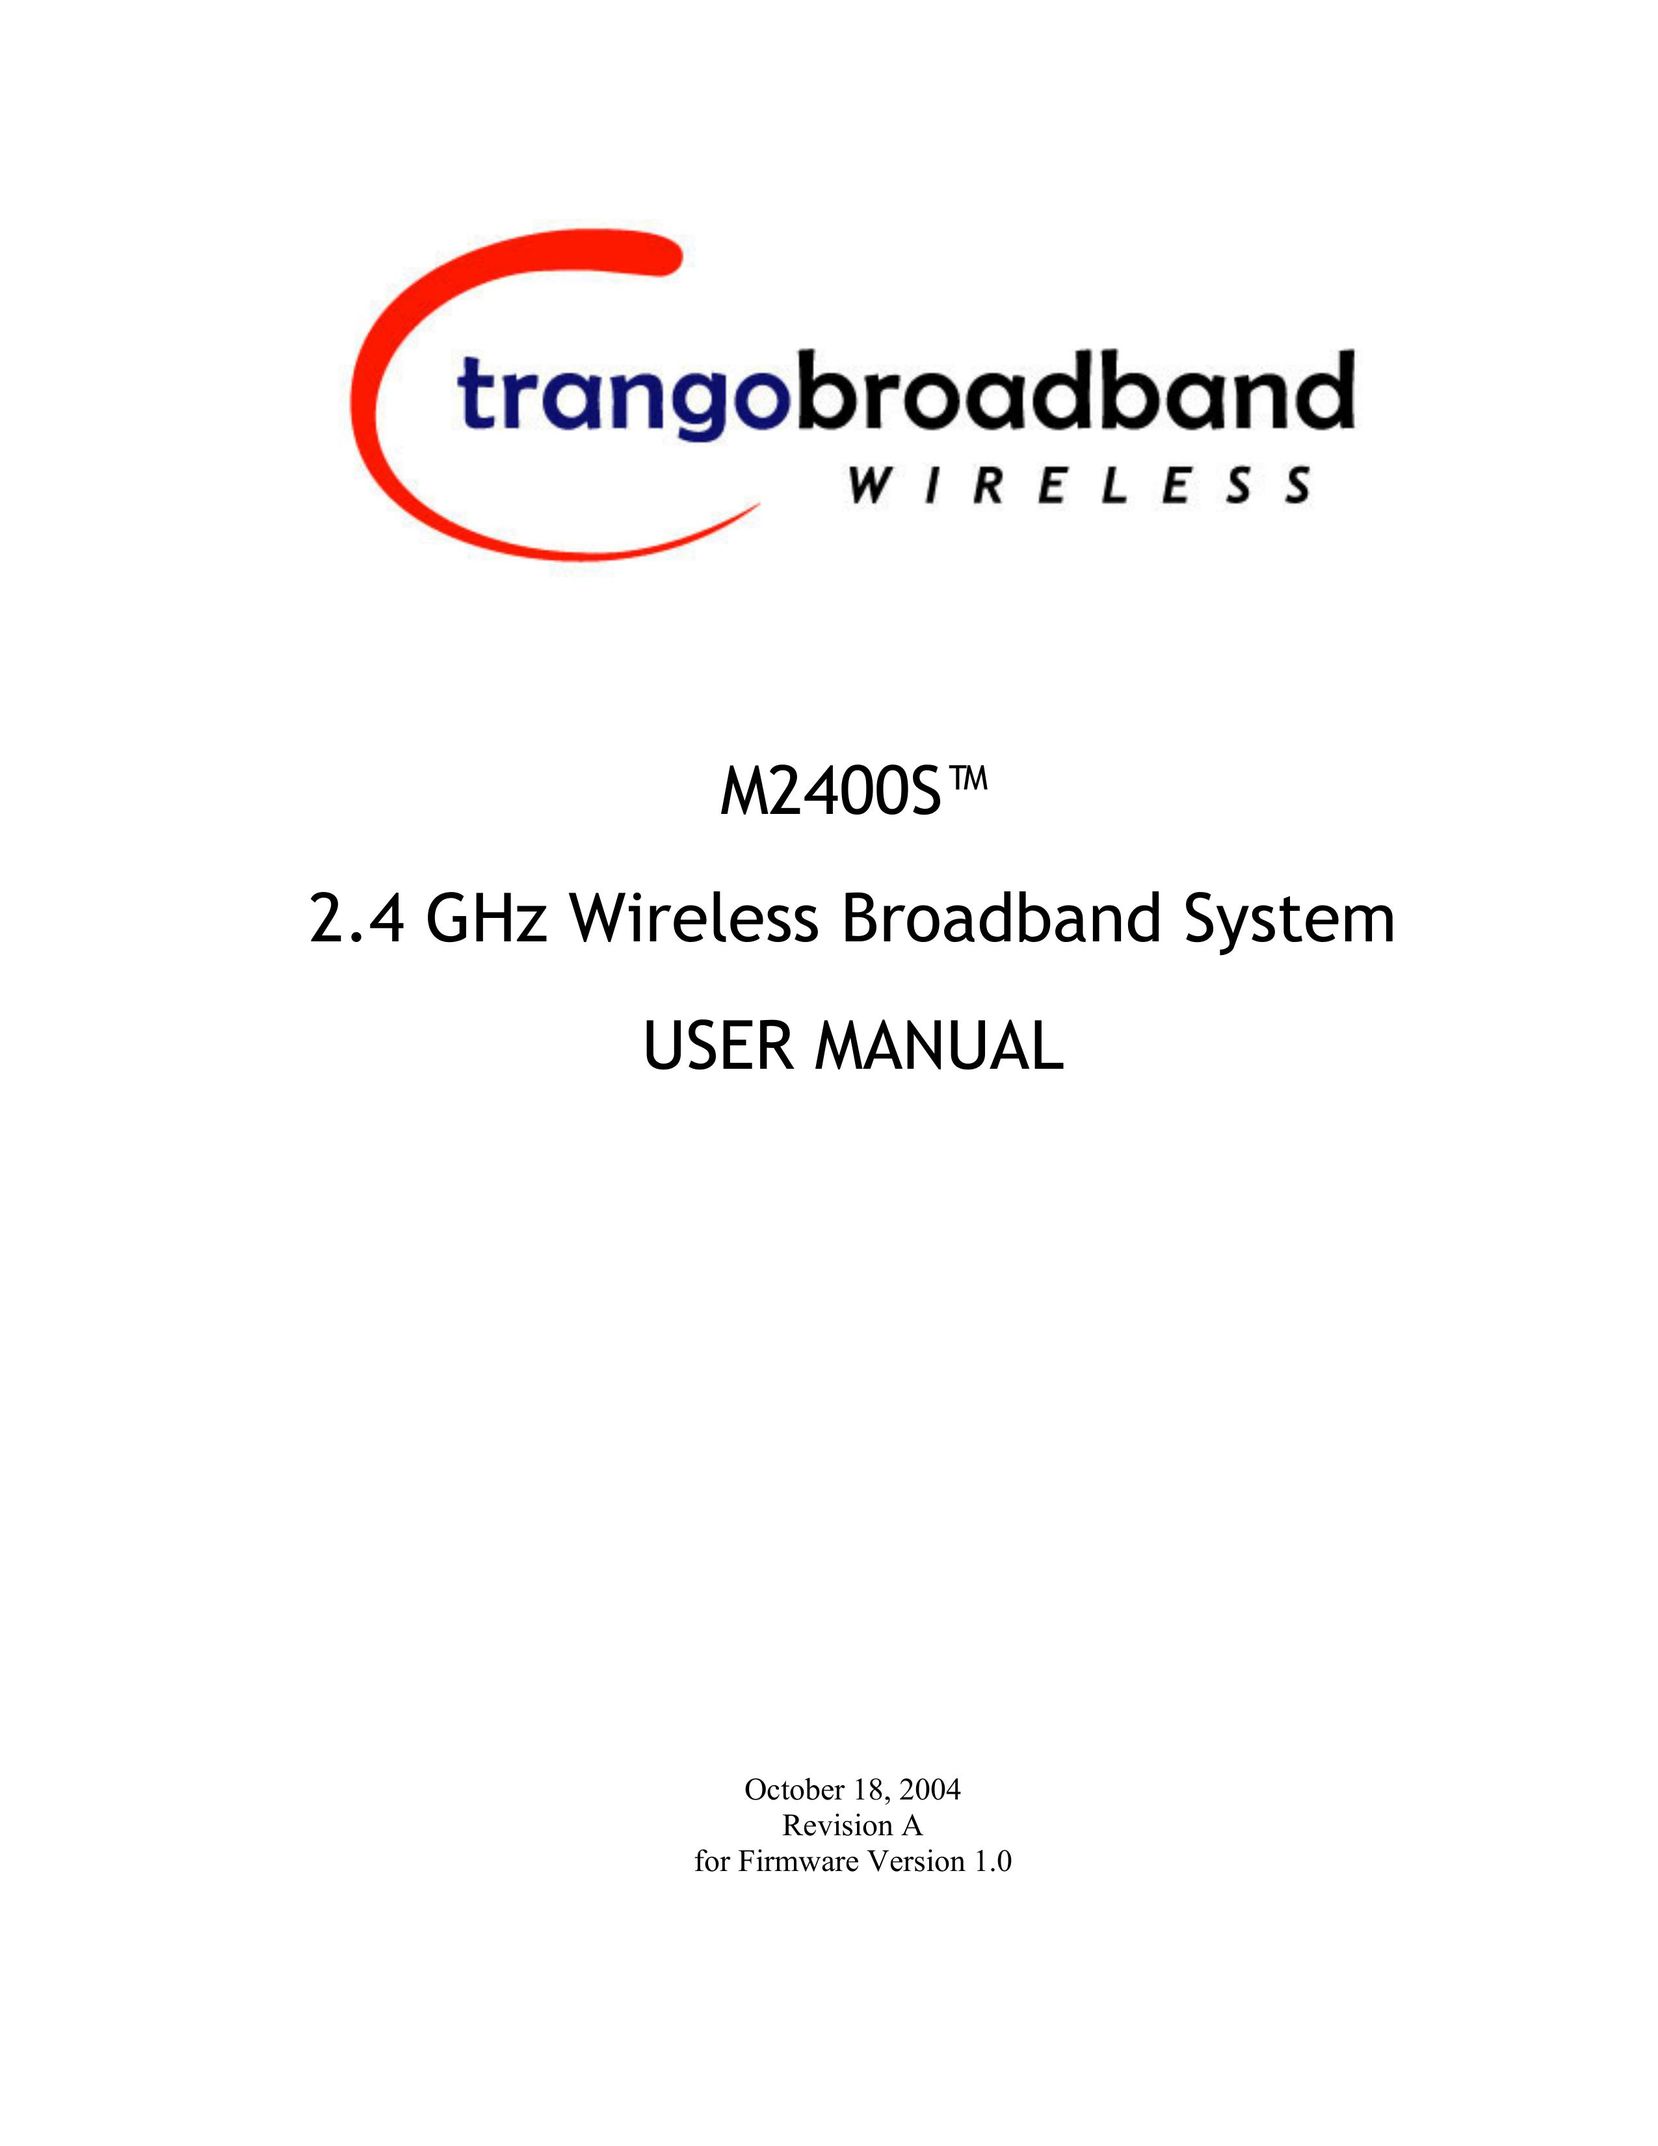 Trango Broadband M2400S Network Router User Manual